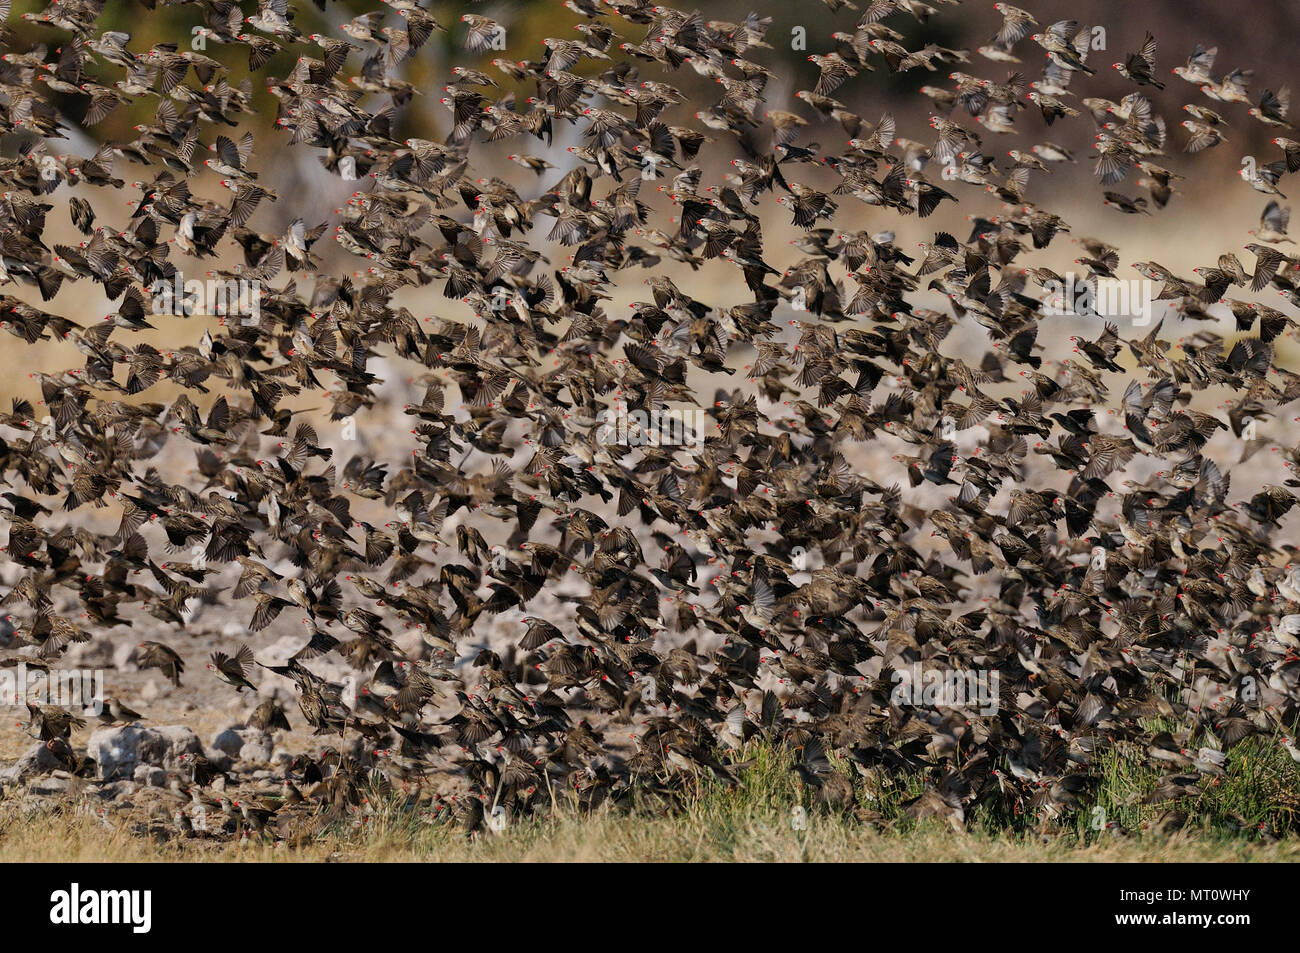 Redbilled quelea swarm in the air, (quelea quelea), etosha nationalpark, namibia Stock Photo